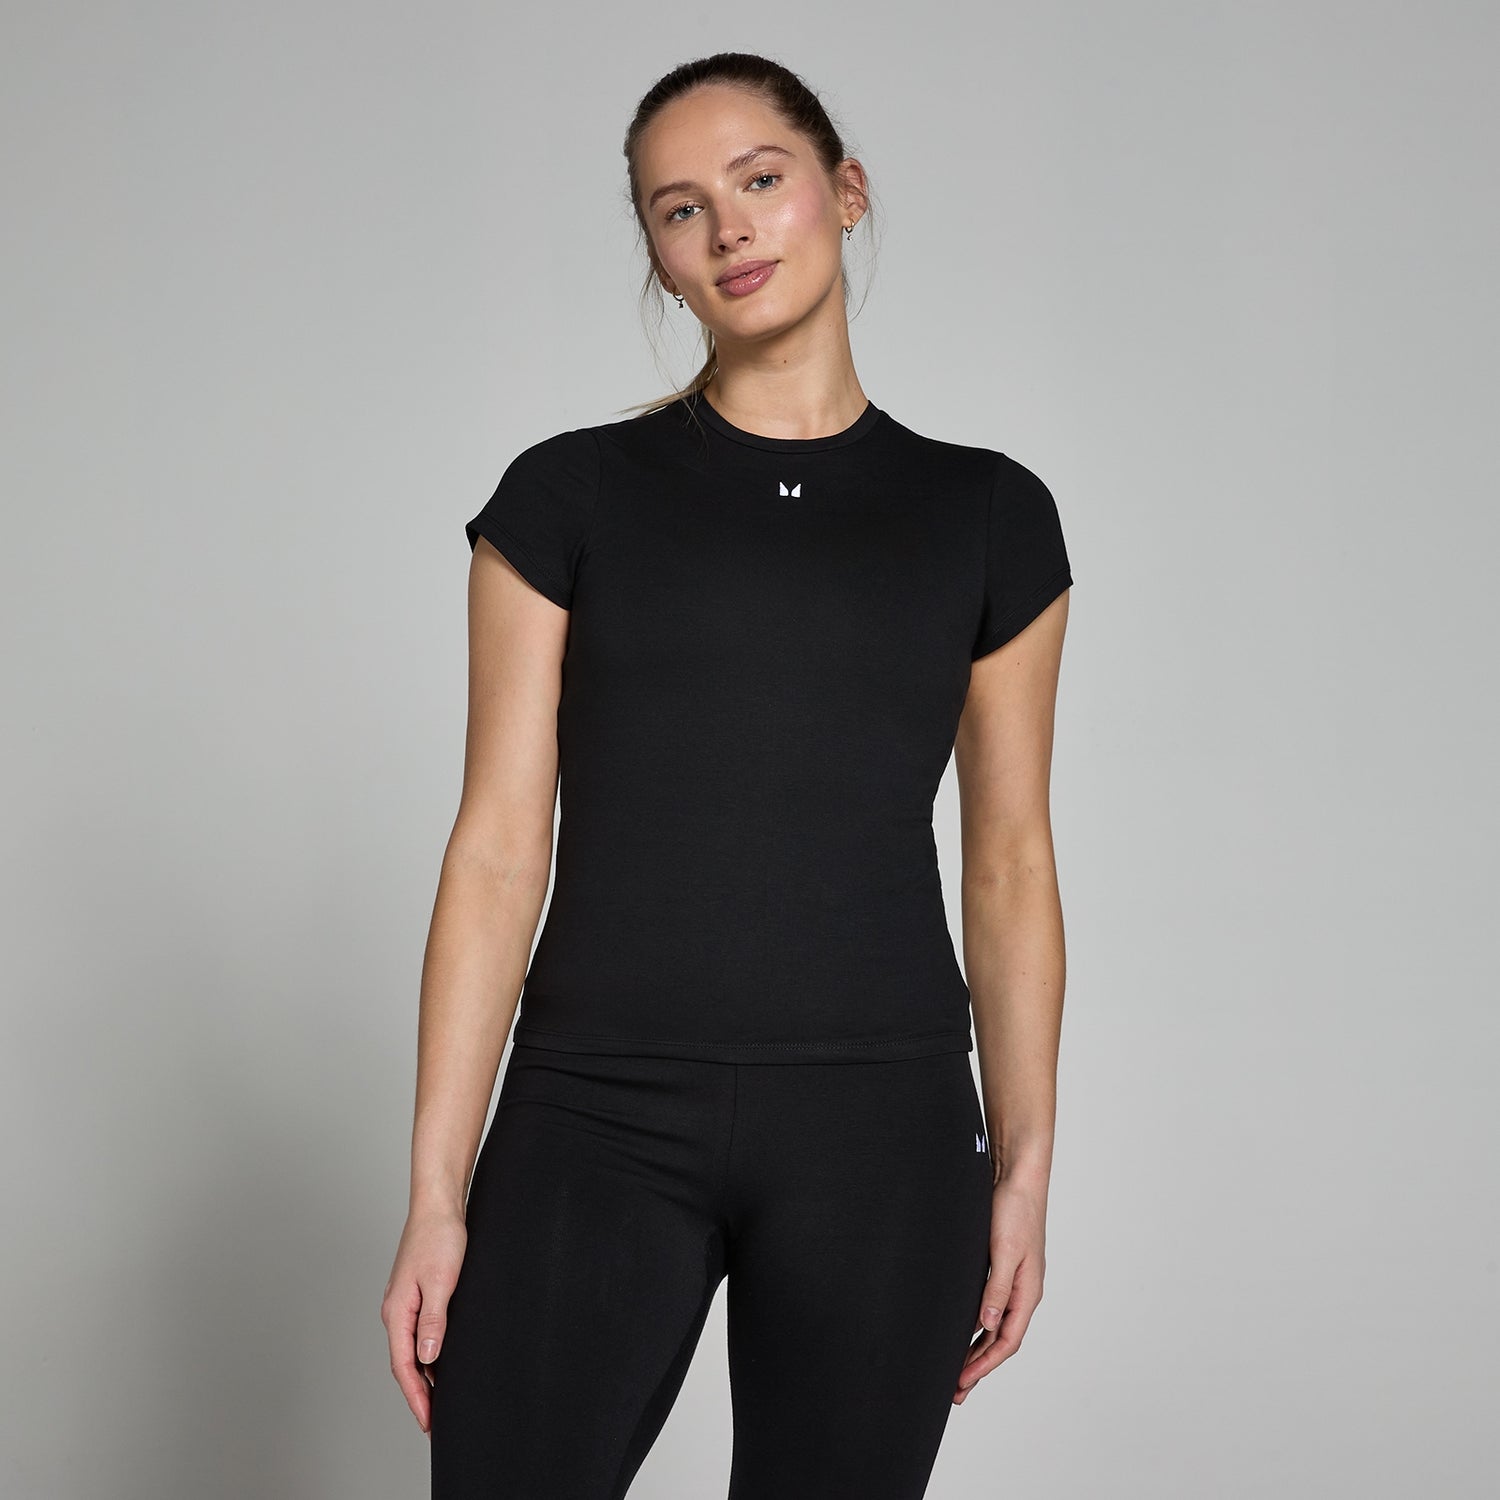 MP Women's Basic Body Fit Short Sleeve T-Shirt - Black - XXS